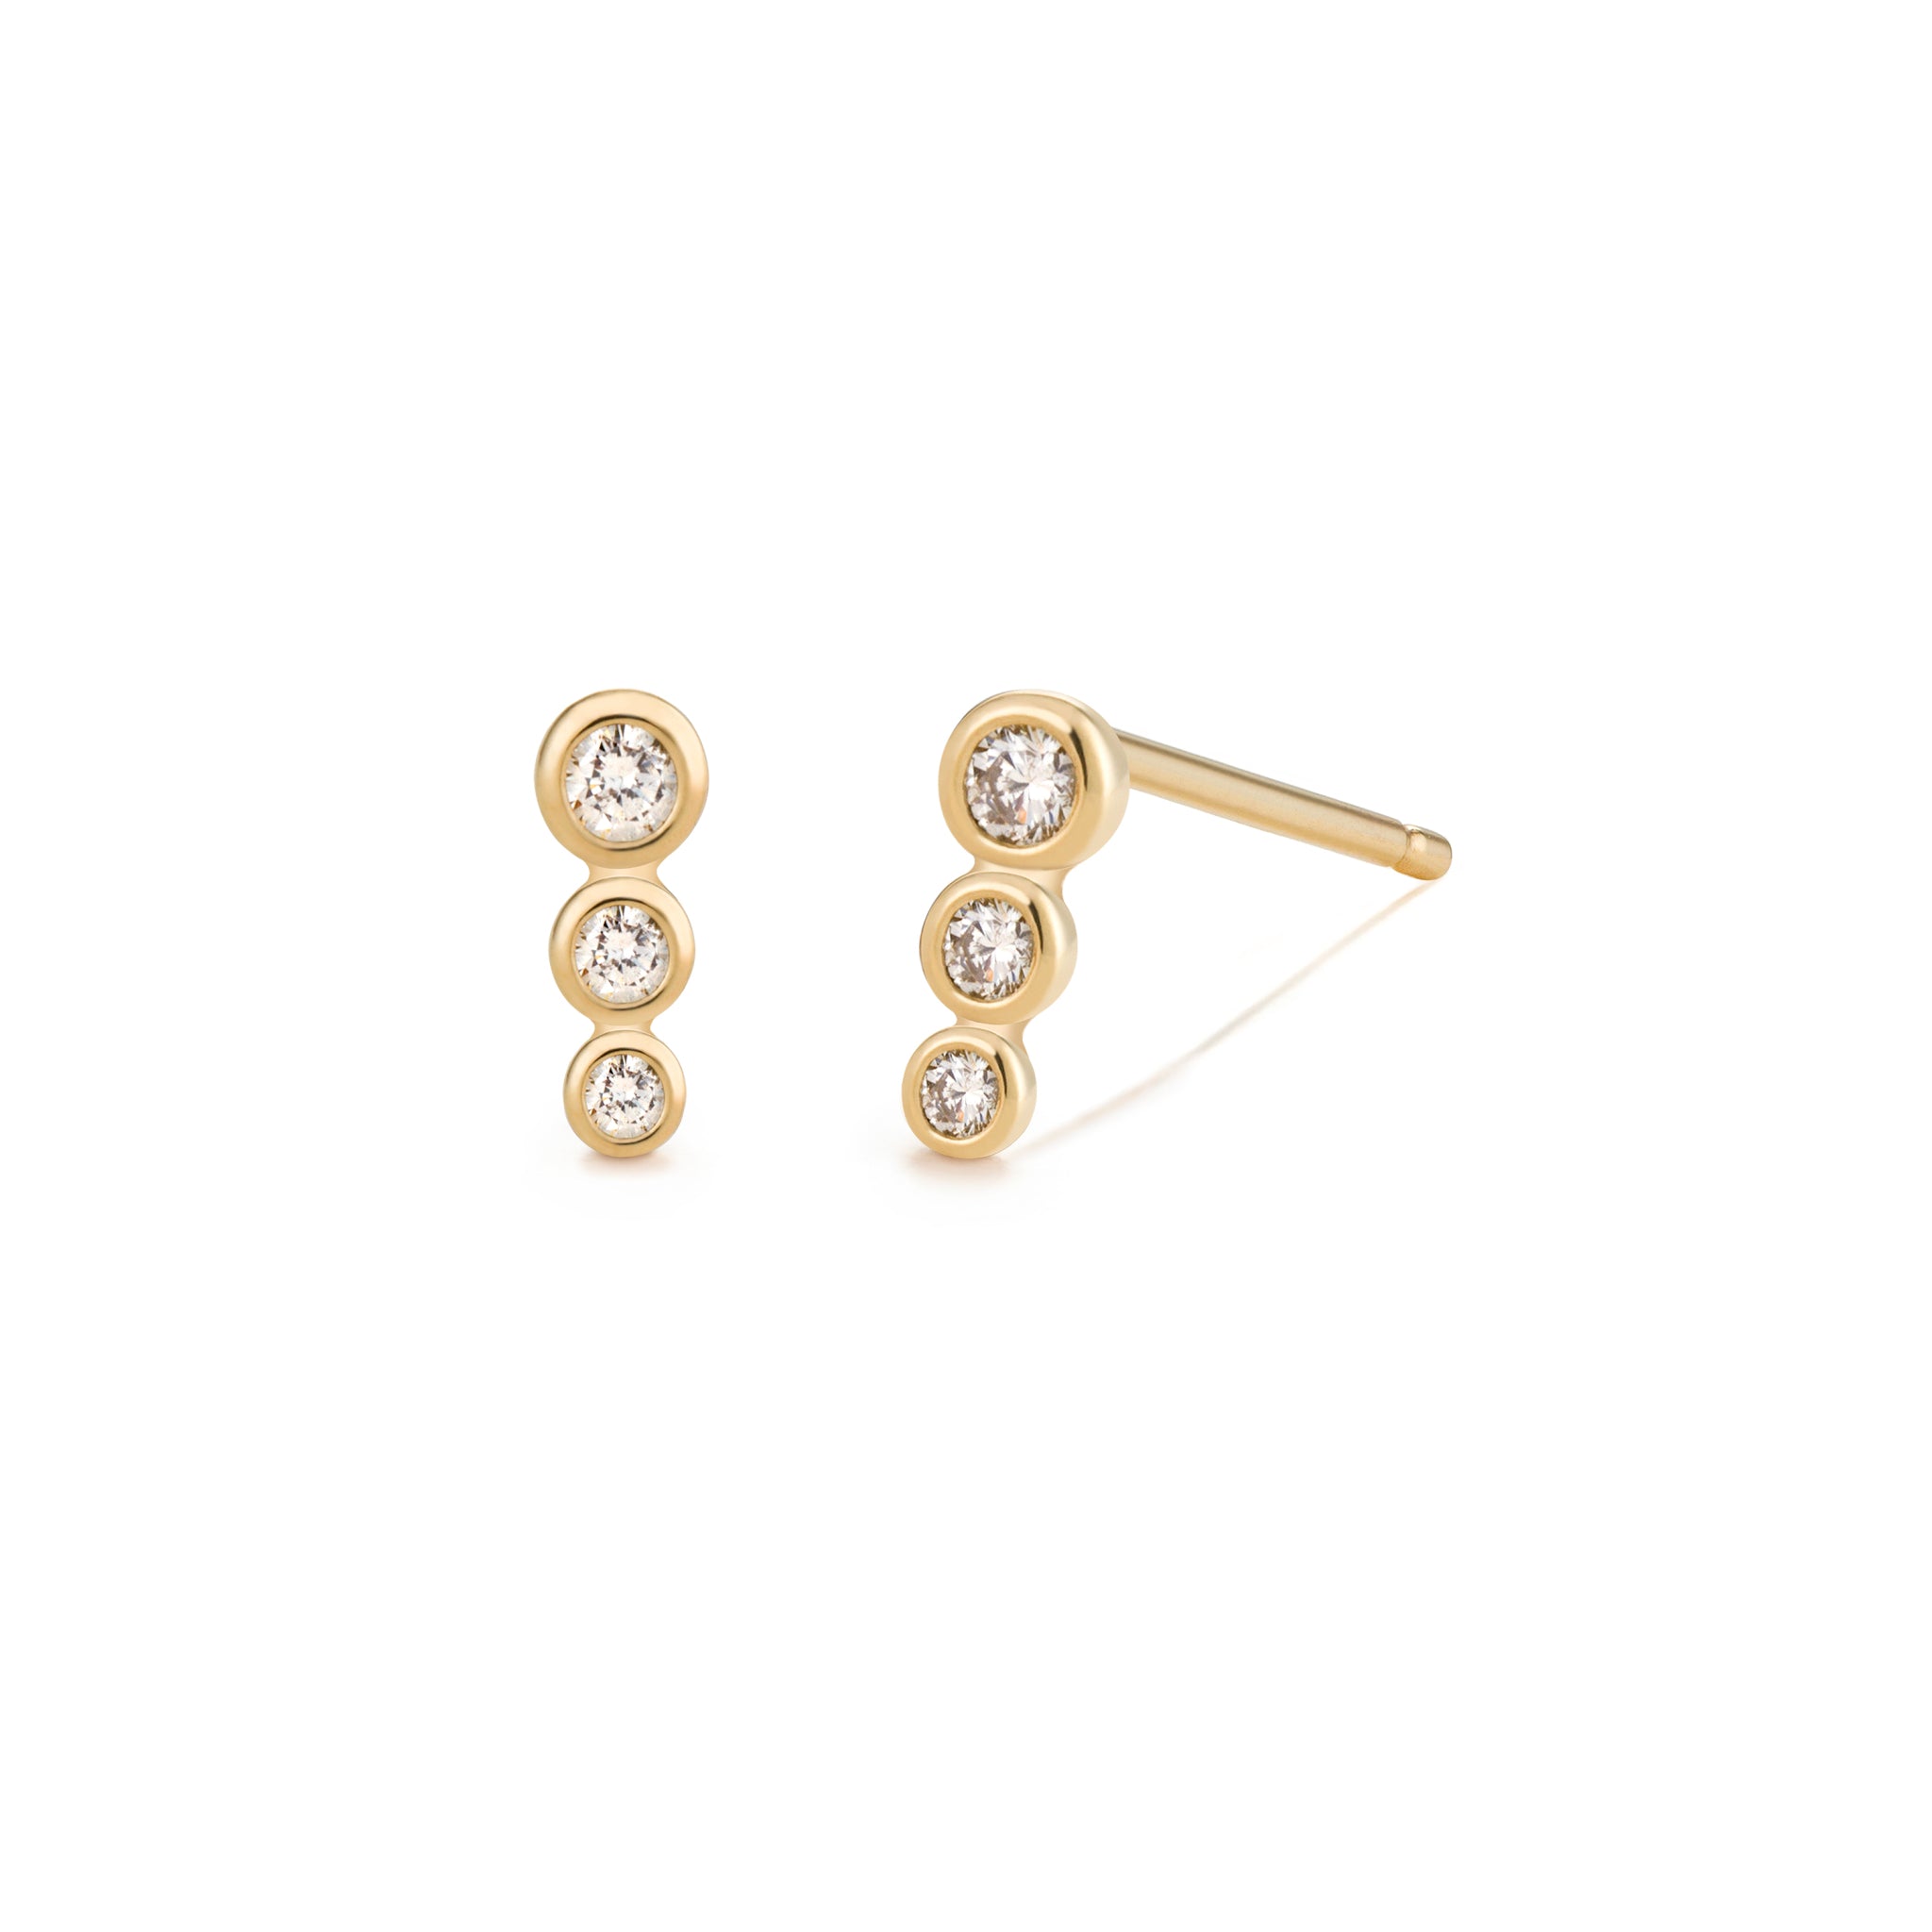 14K Yellow Gold Button Diamond Earrings